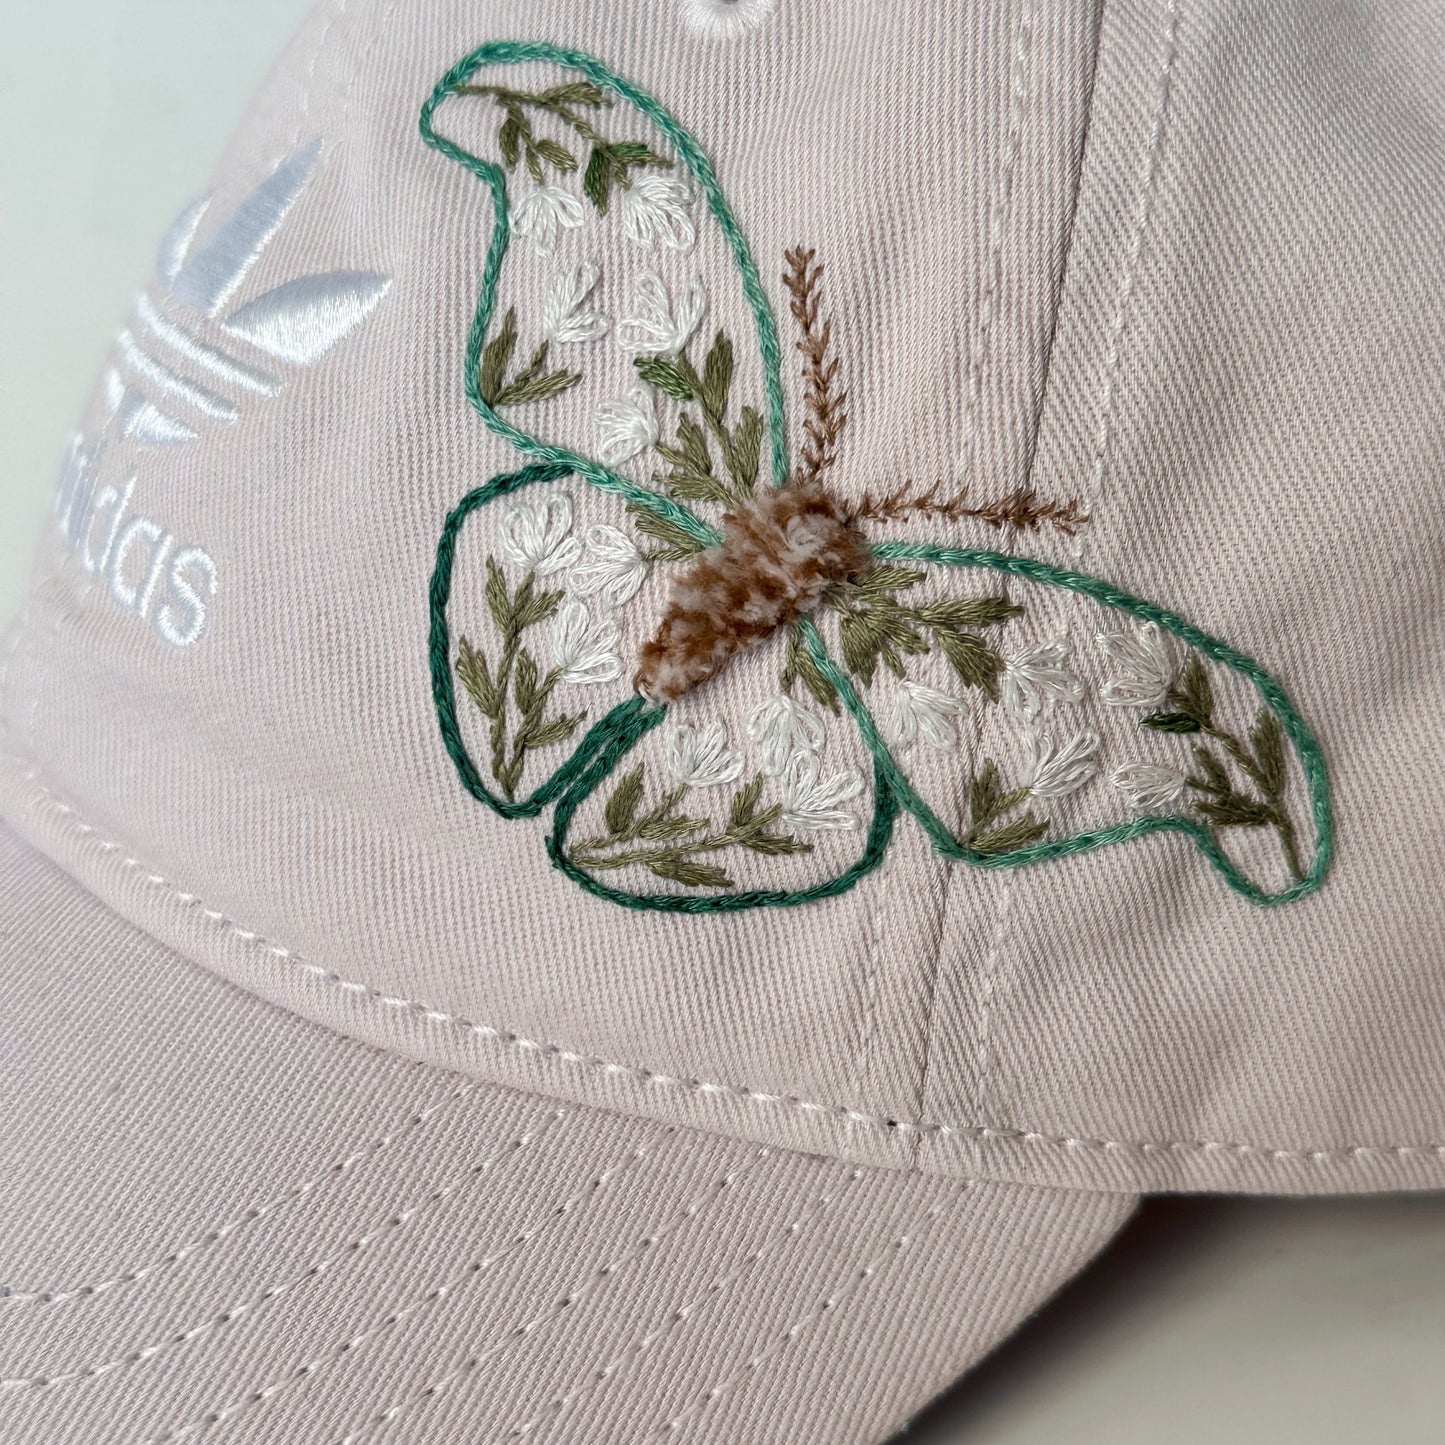 Embroidered Moth Adidas Ball Cap